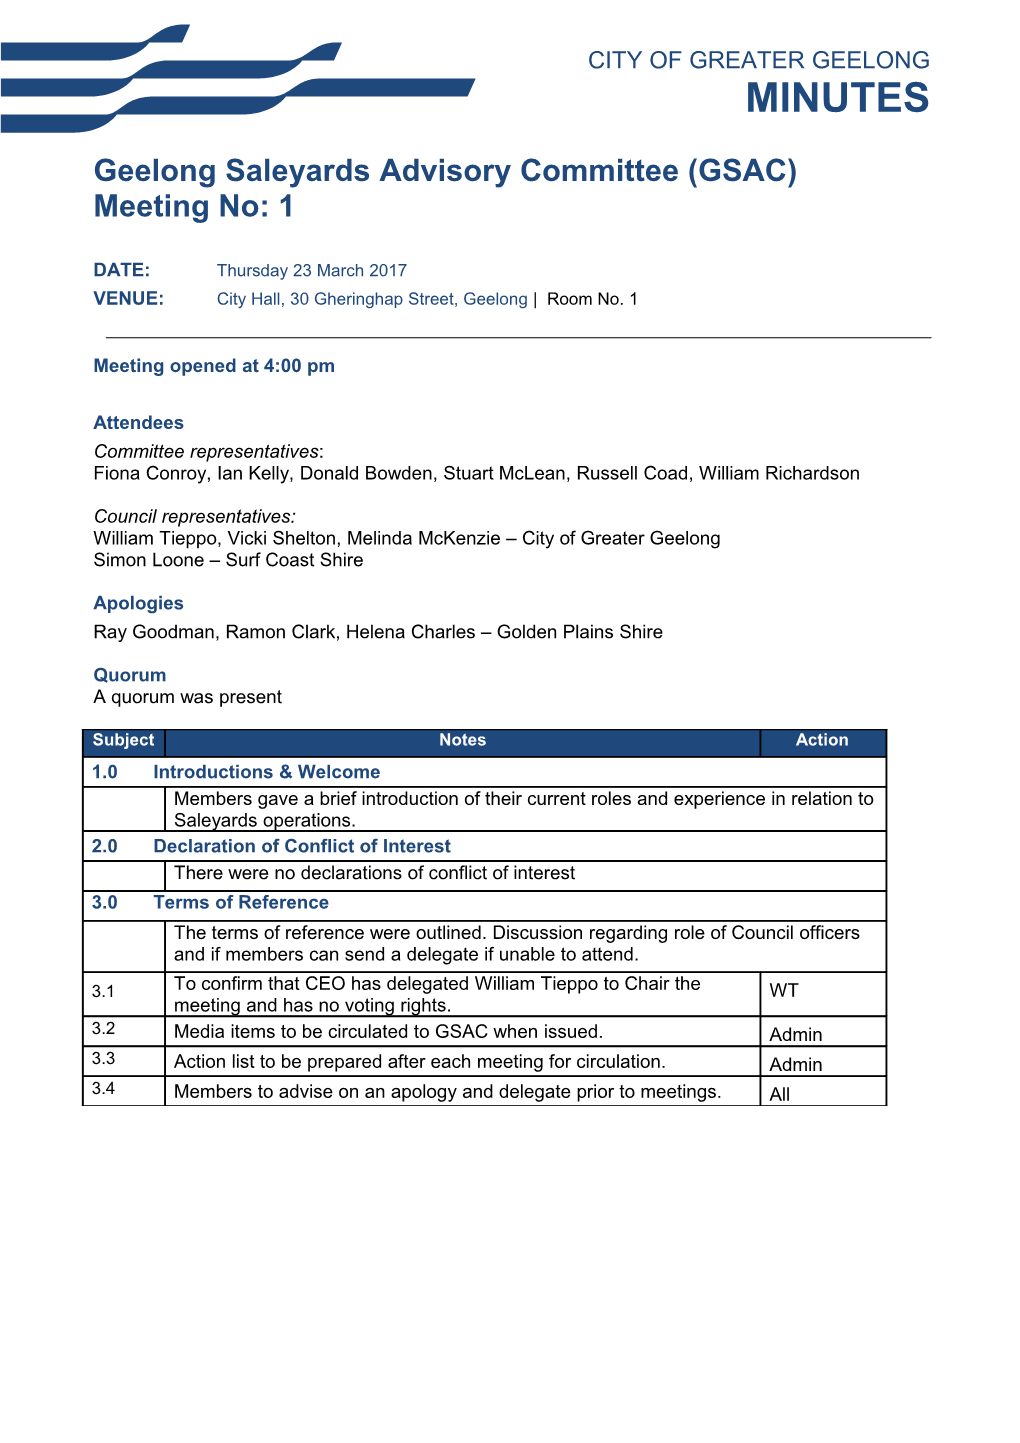 Geelong Saleyards Advisory Committee (GSAC) Meeting No: 1